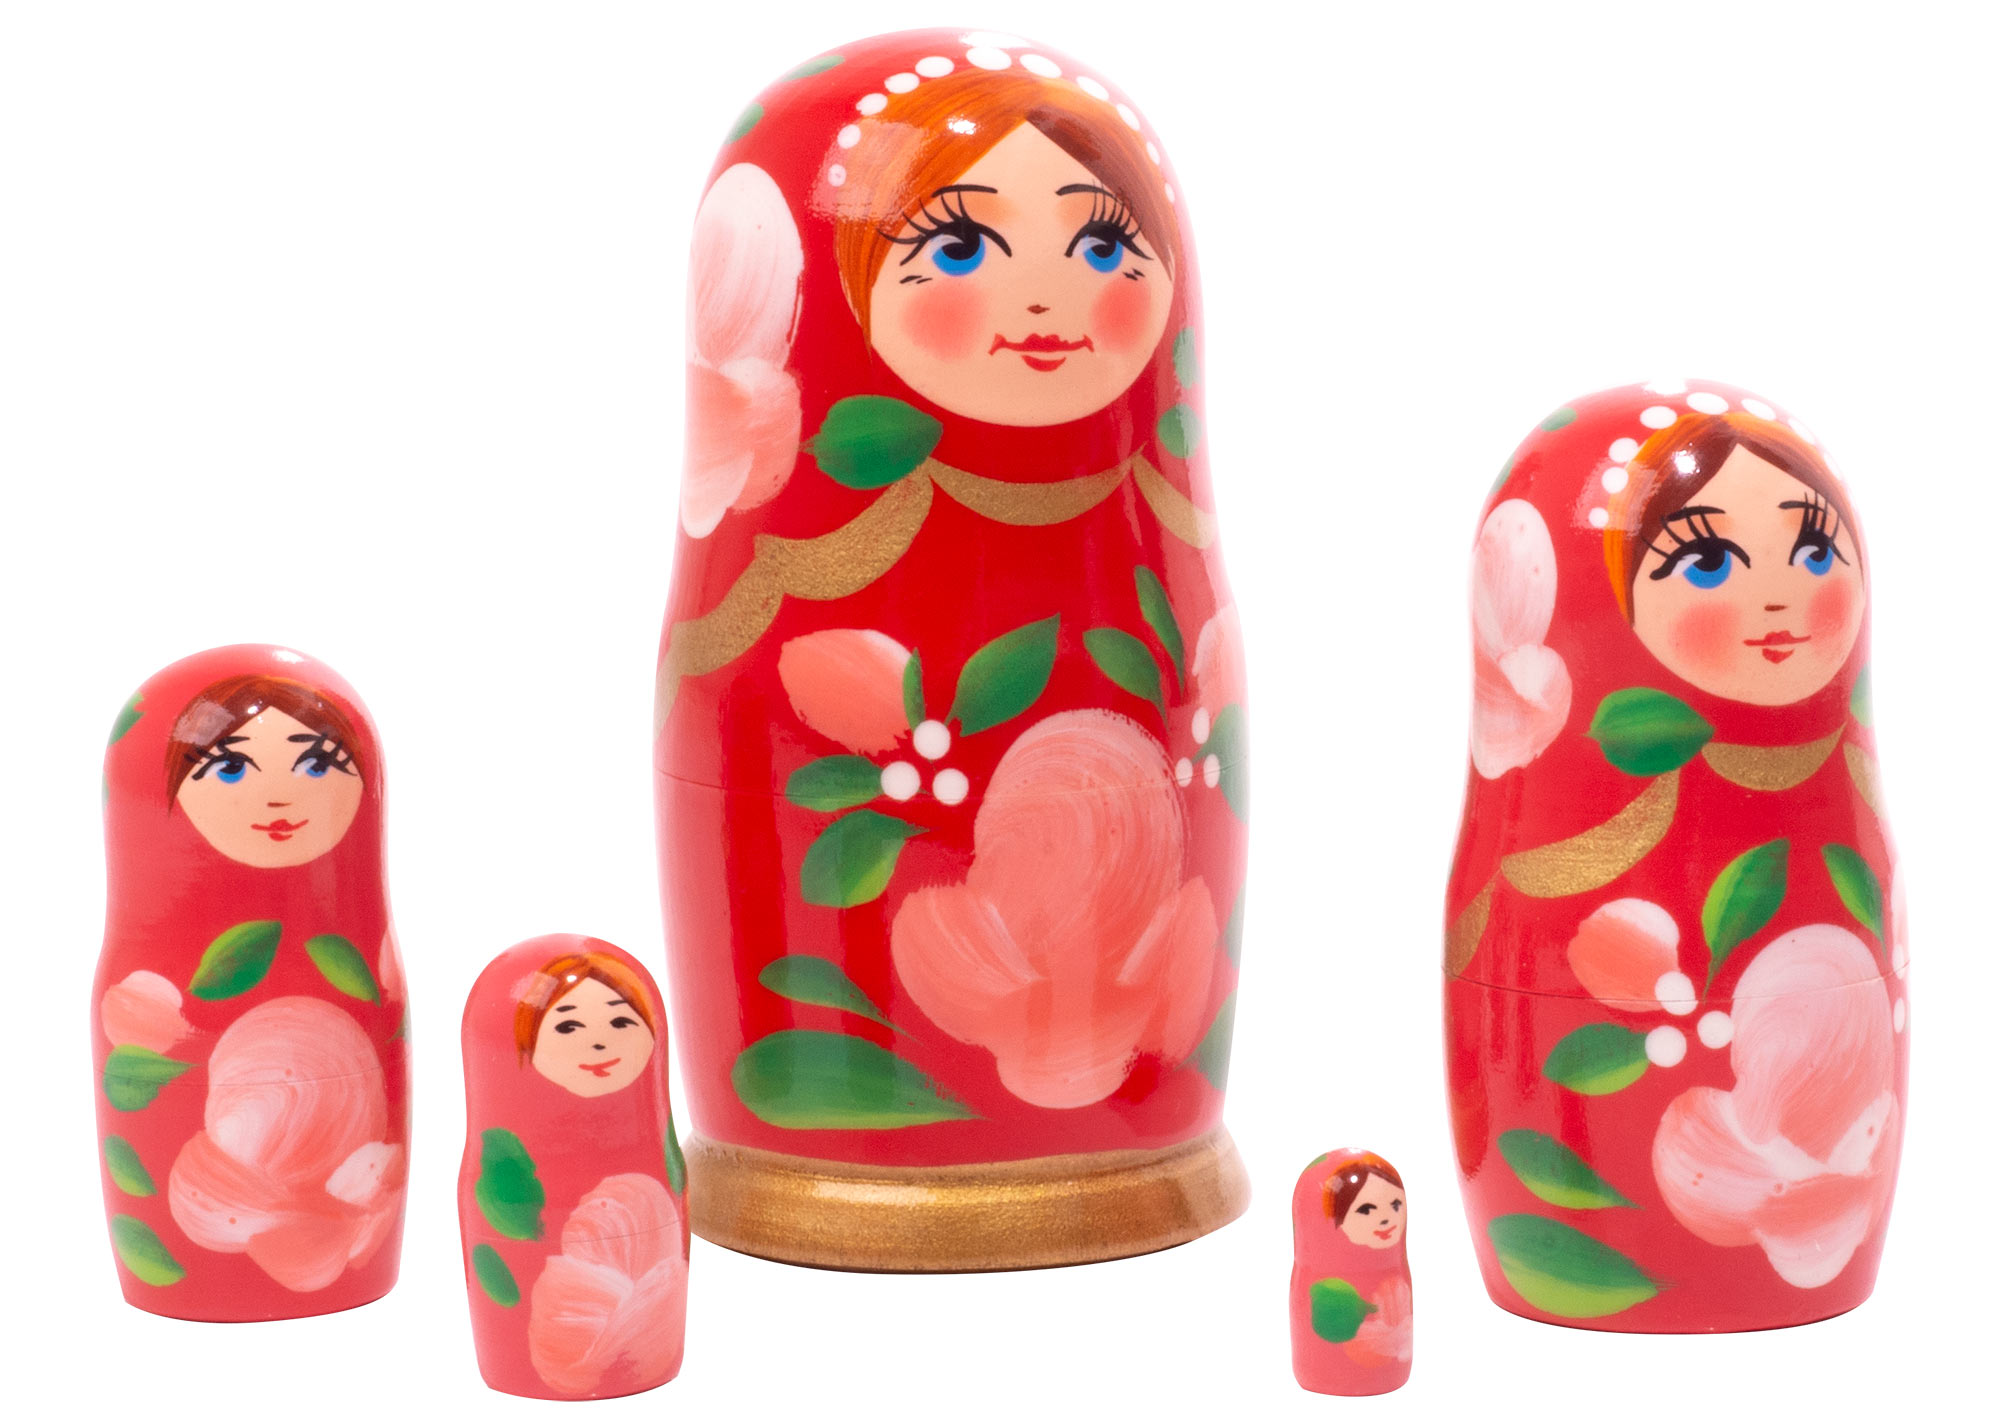 Buy Red Gradient Nesting Doll 5pc./4" – Russian Doll Inside A Doll at GoldenCockerel.com